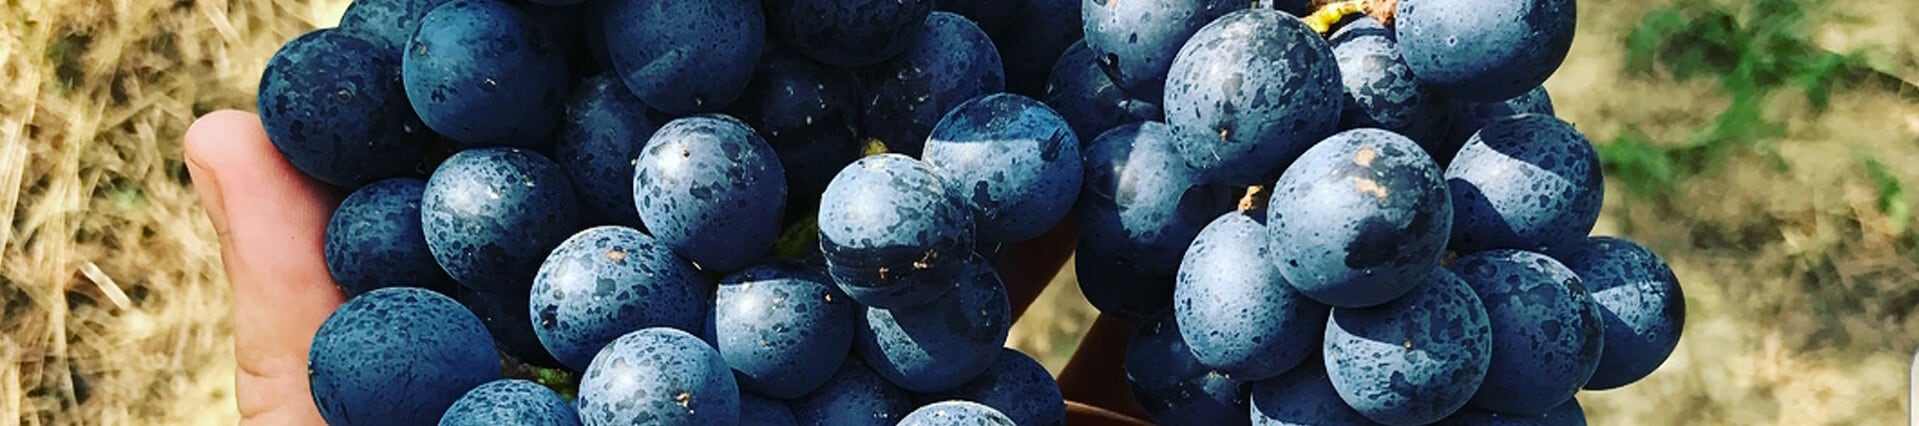 Nos vins biodynamiques - Provence